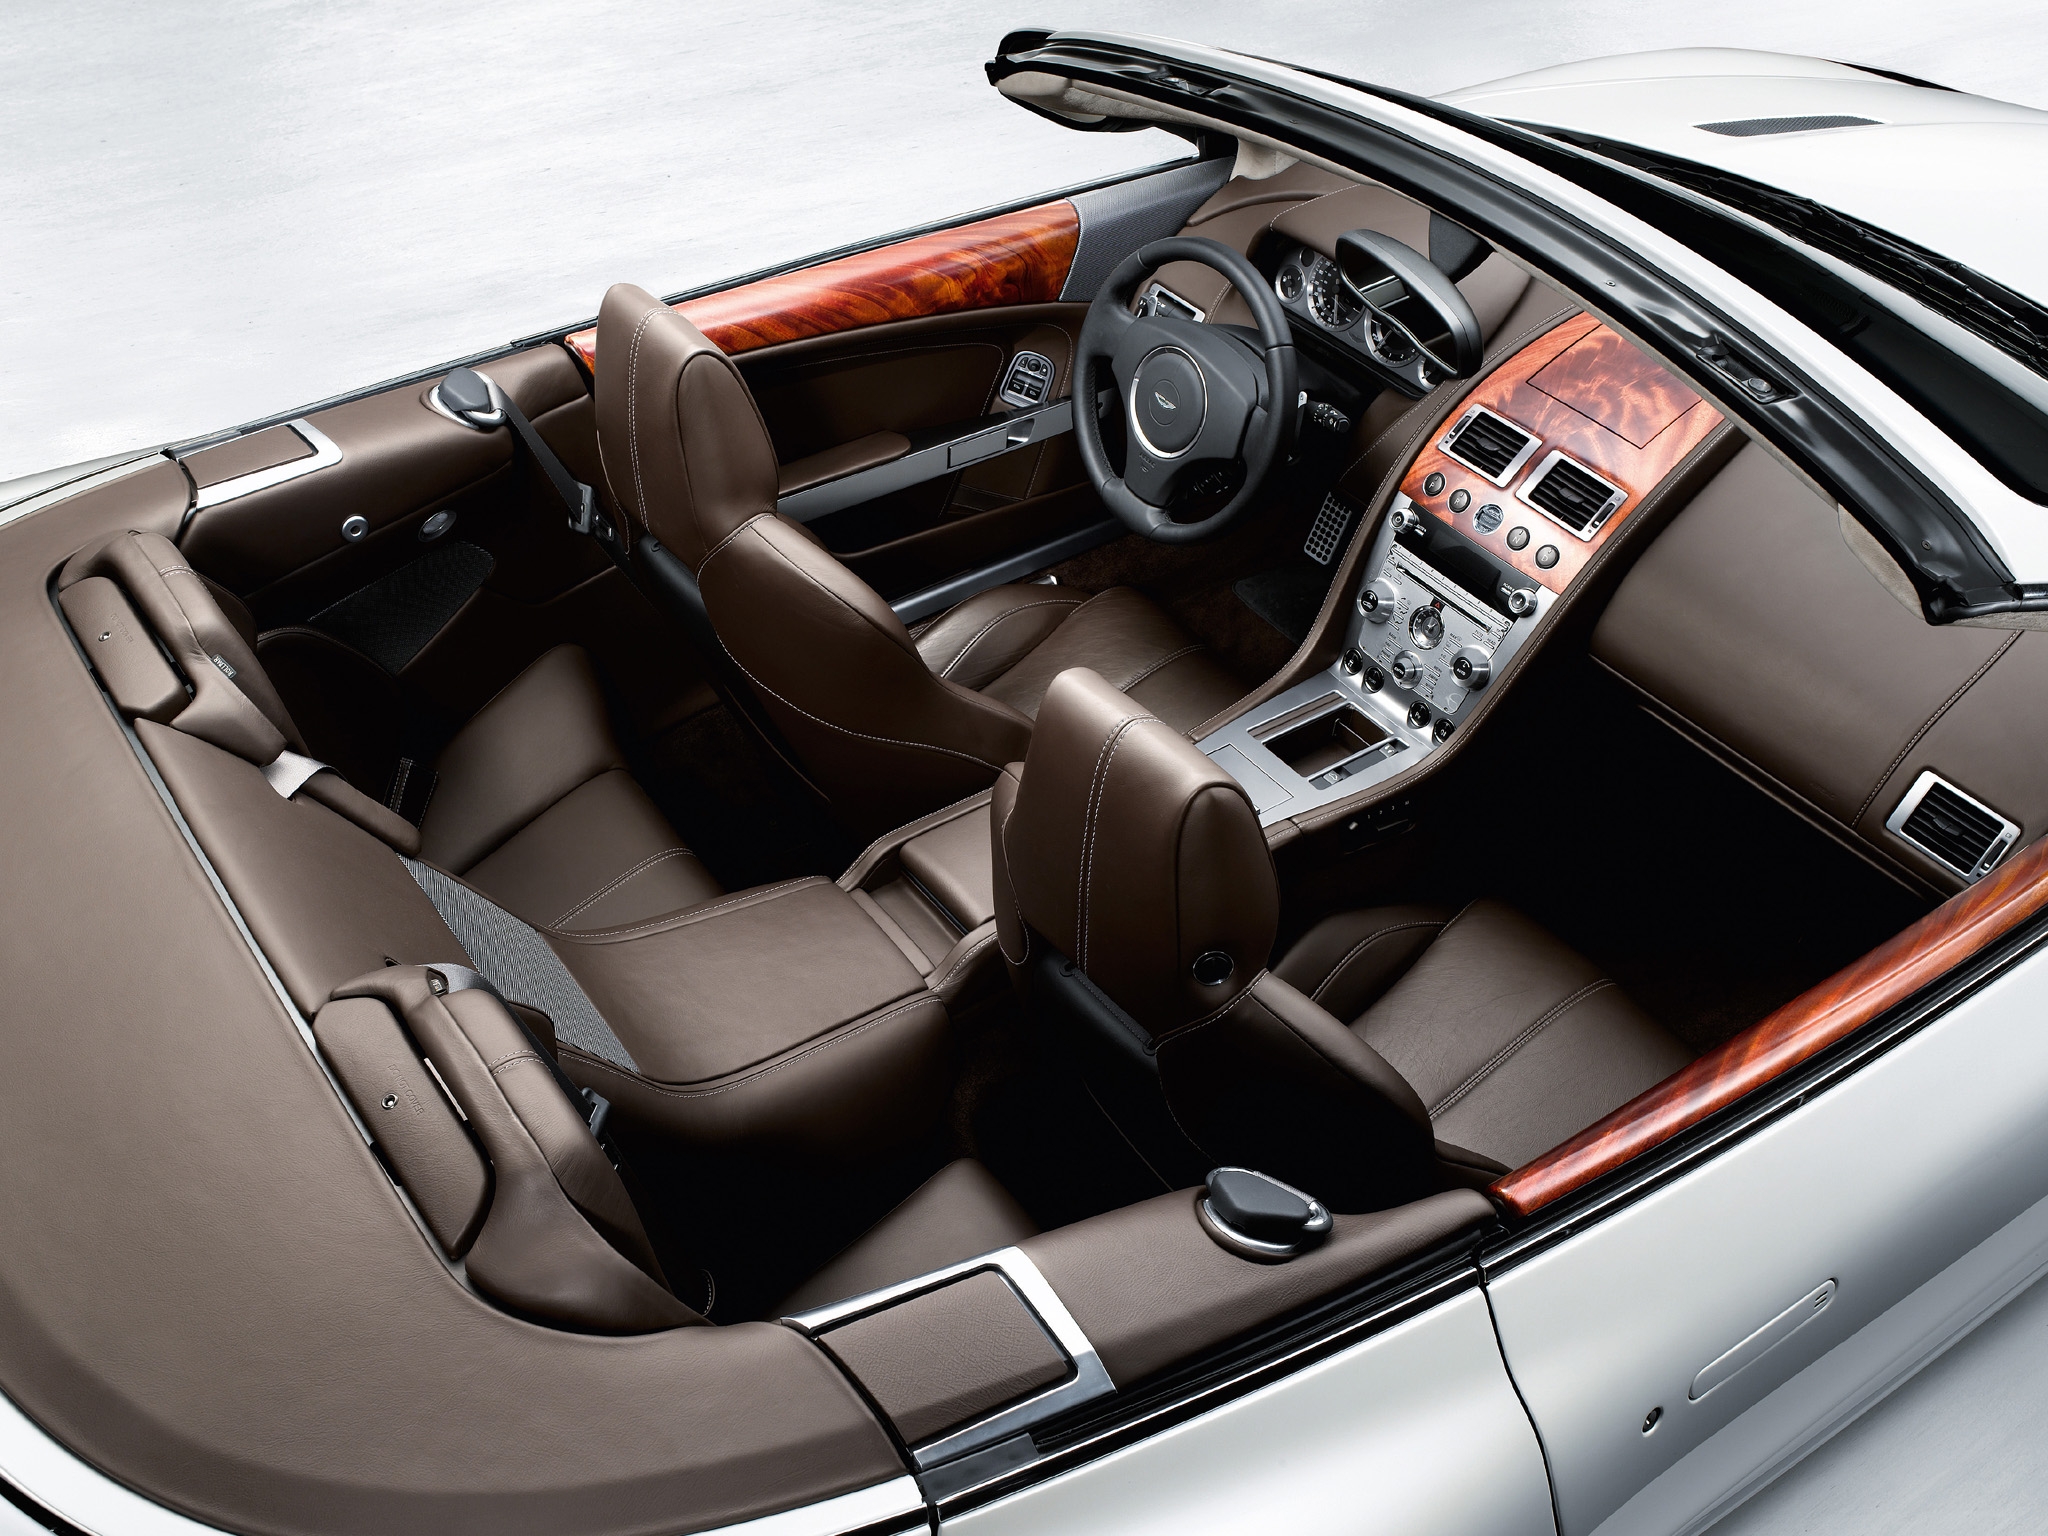 steering wheel, interior, aston martin, cars, view from above, brown, 2008, rudder, salon, speedometer, db9 4K for PC